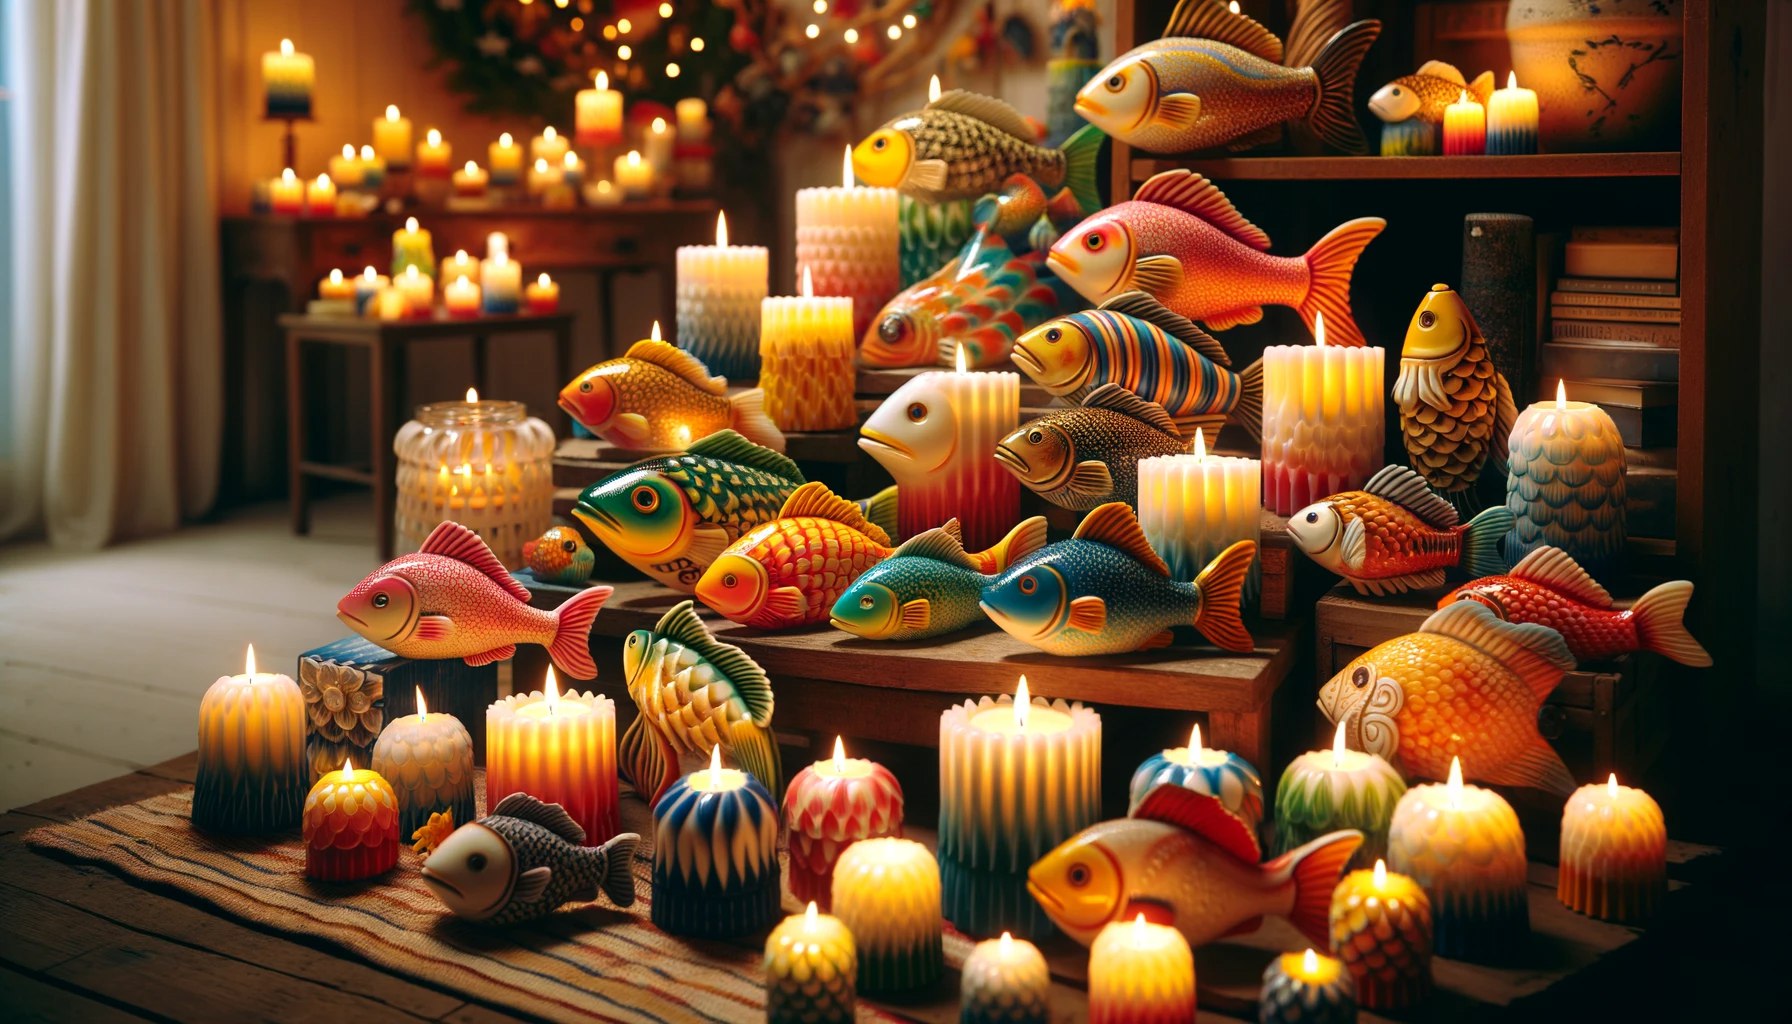 Fish Candles Filling Joy Happily Glows aauueezzzzzzz